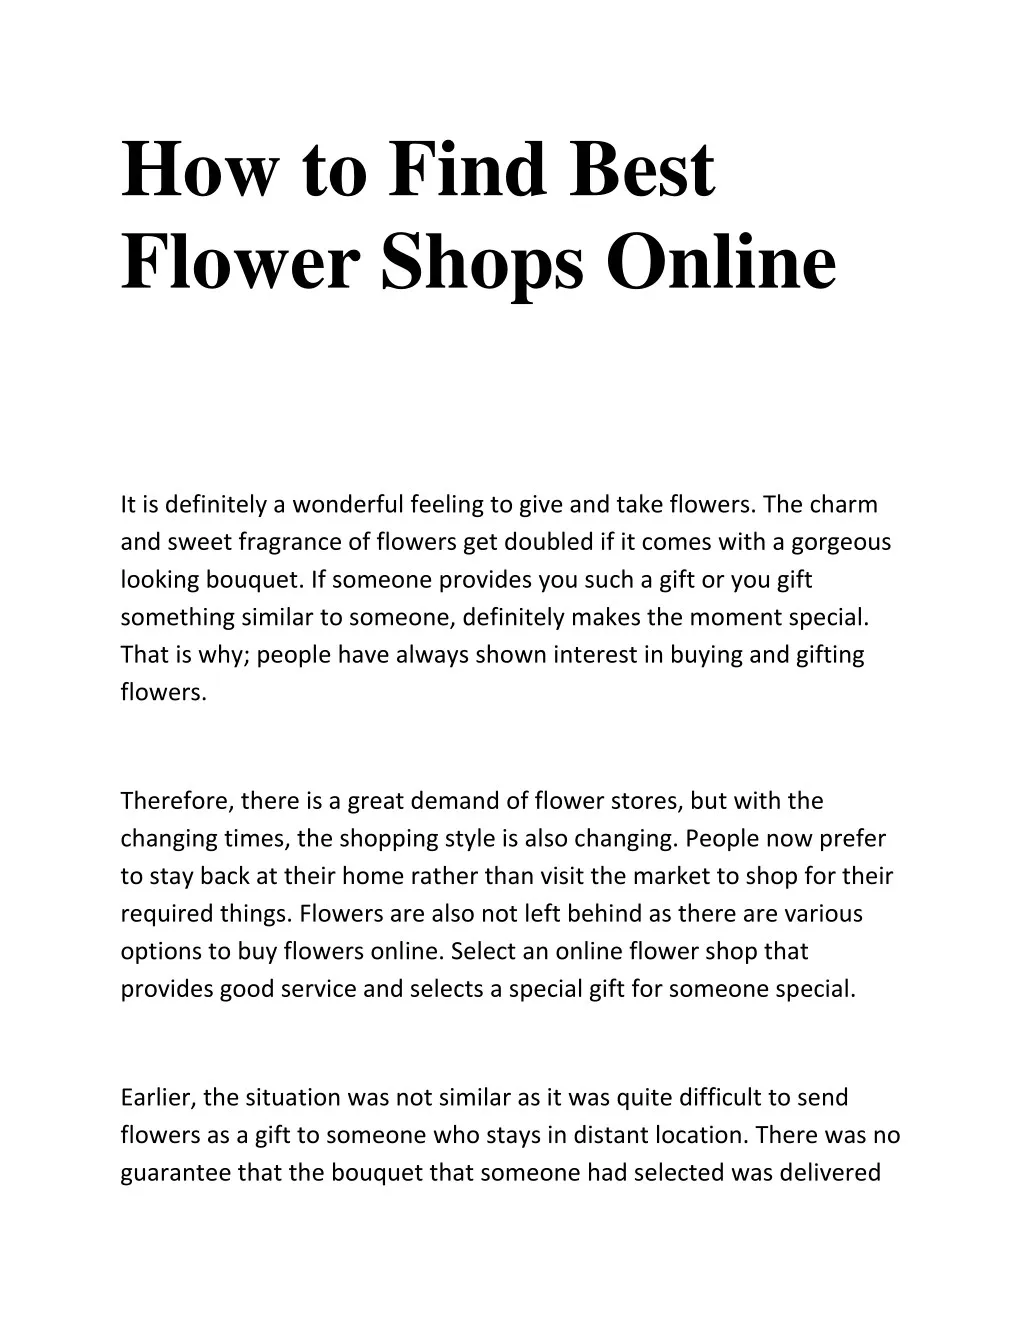 PPT - How to Find Best Flower Shops Online PowerPoint Presentation